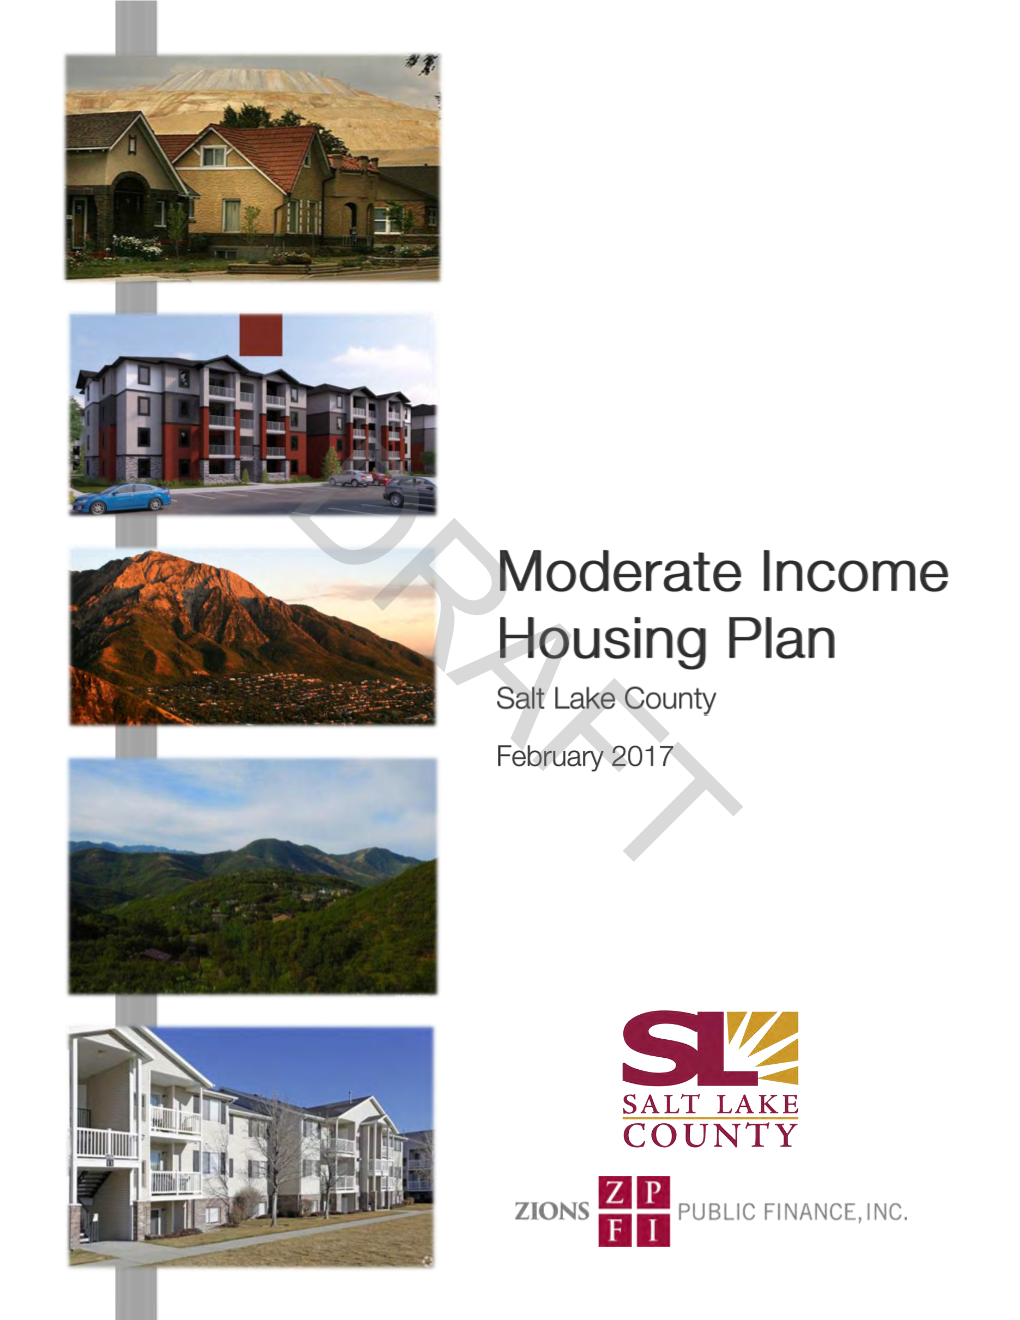 Salt Lake County Moderate Income Housing Plan